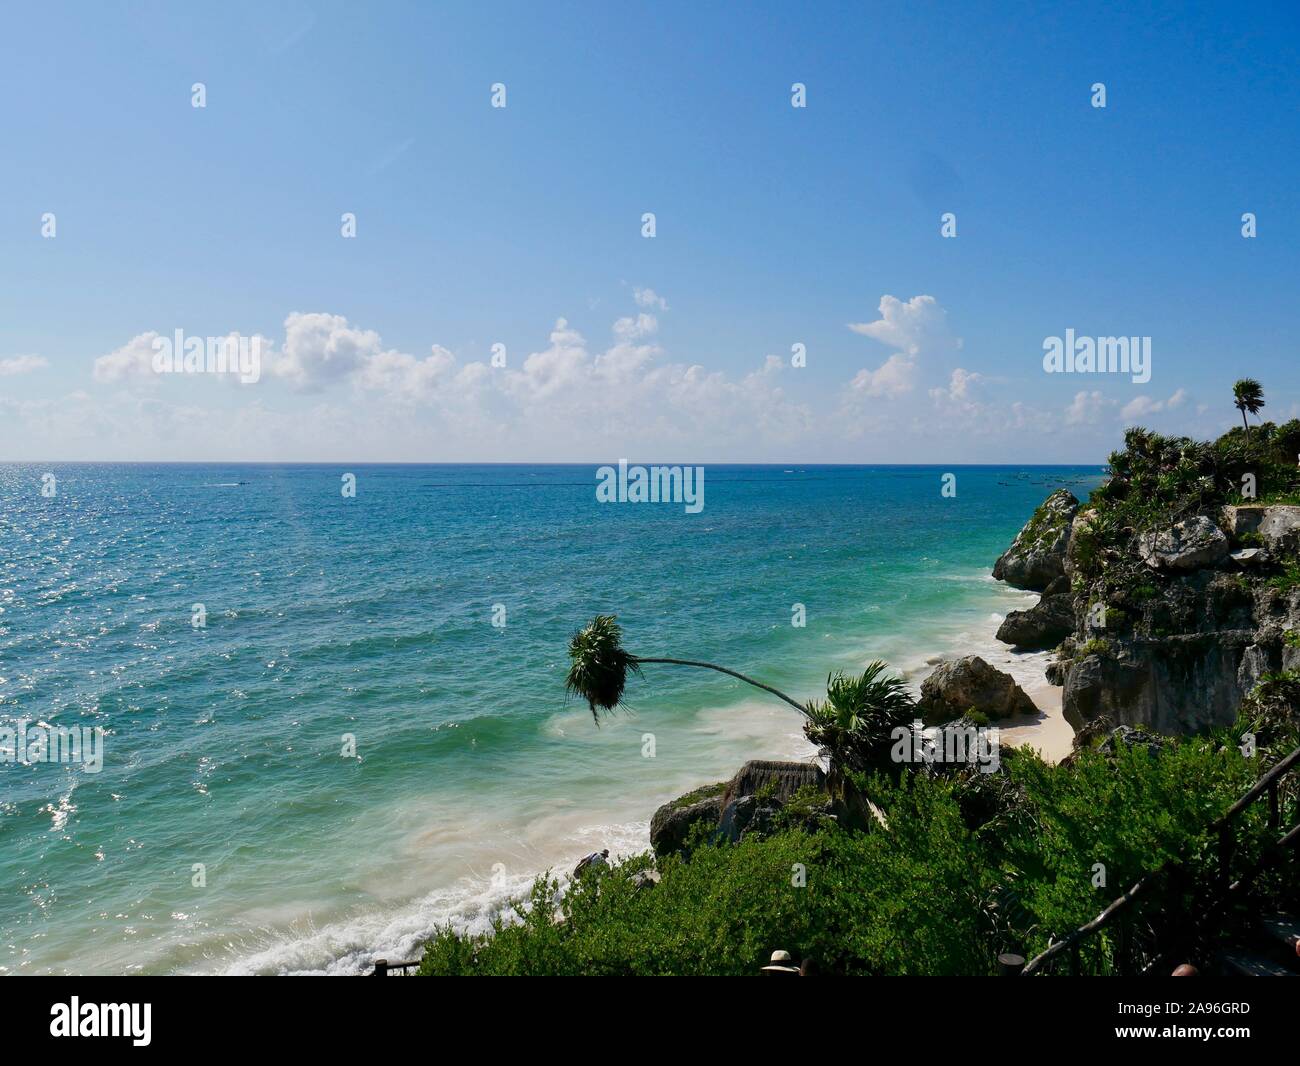 Beach in Tulum, Yucatan, Mexico photo stock Stock Photo